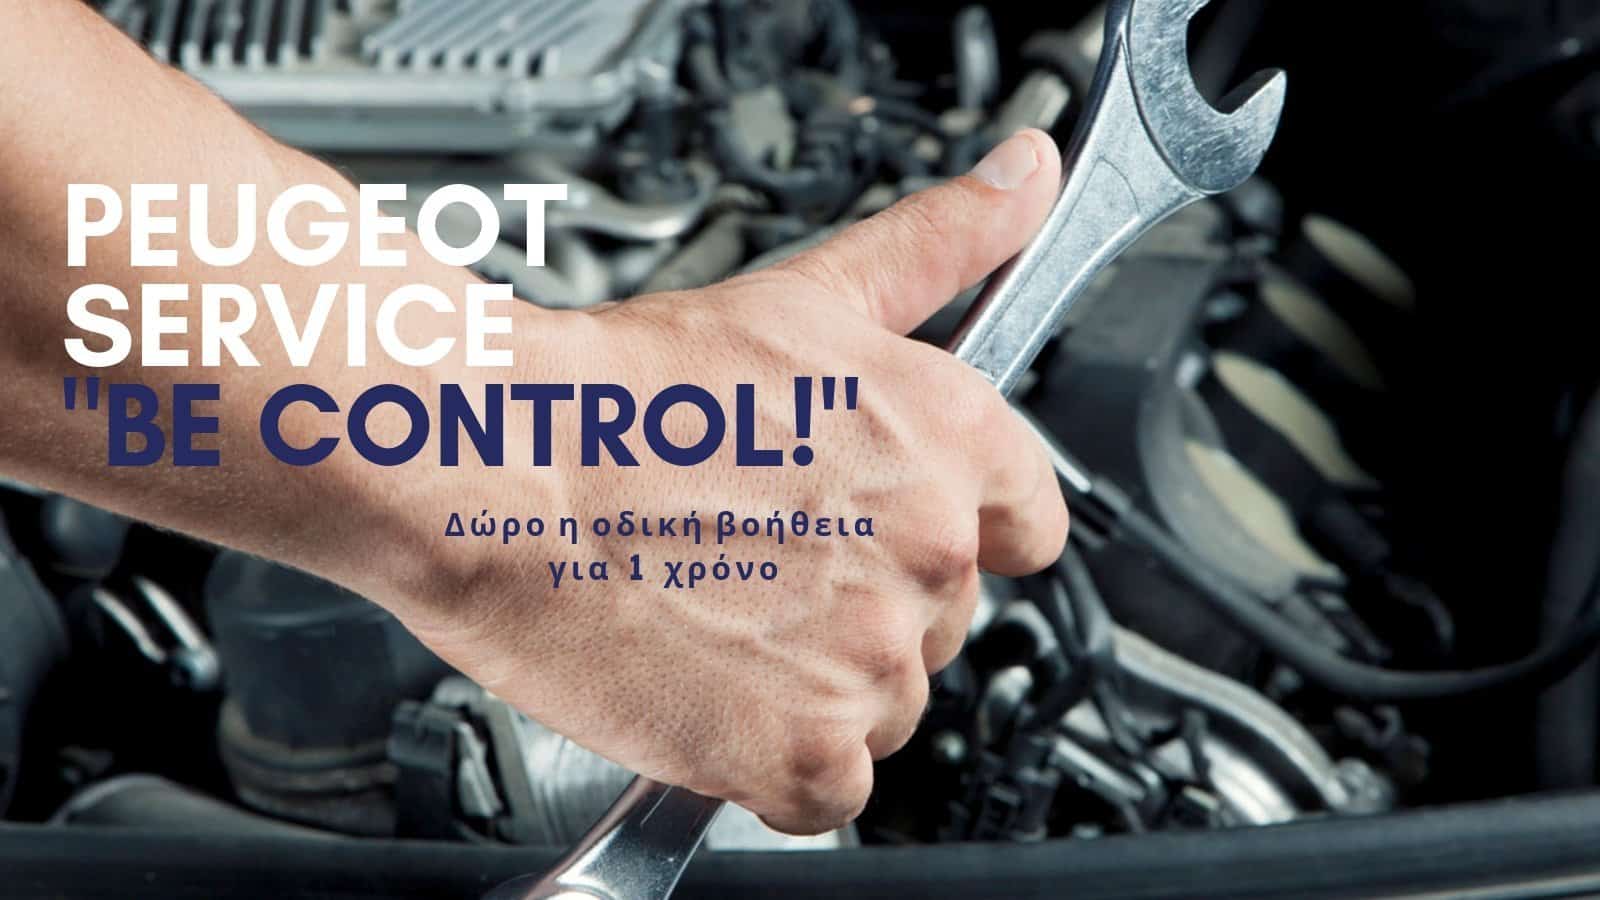 Peugeot Service Be Control